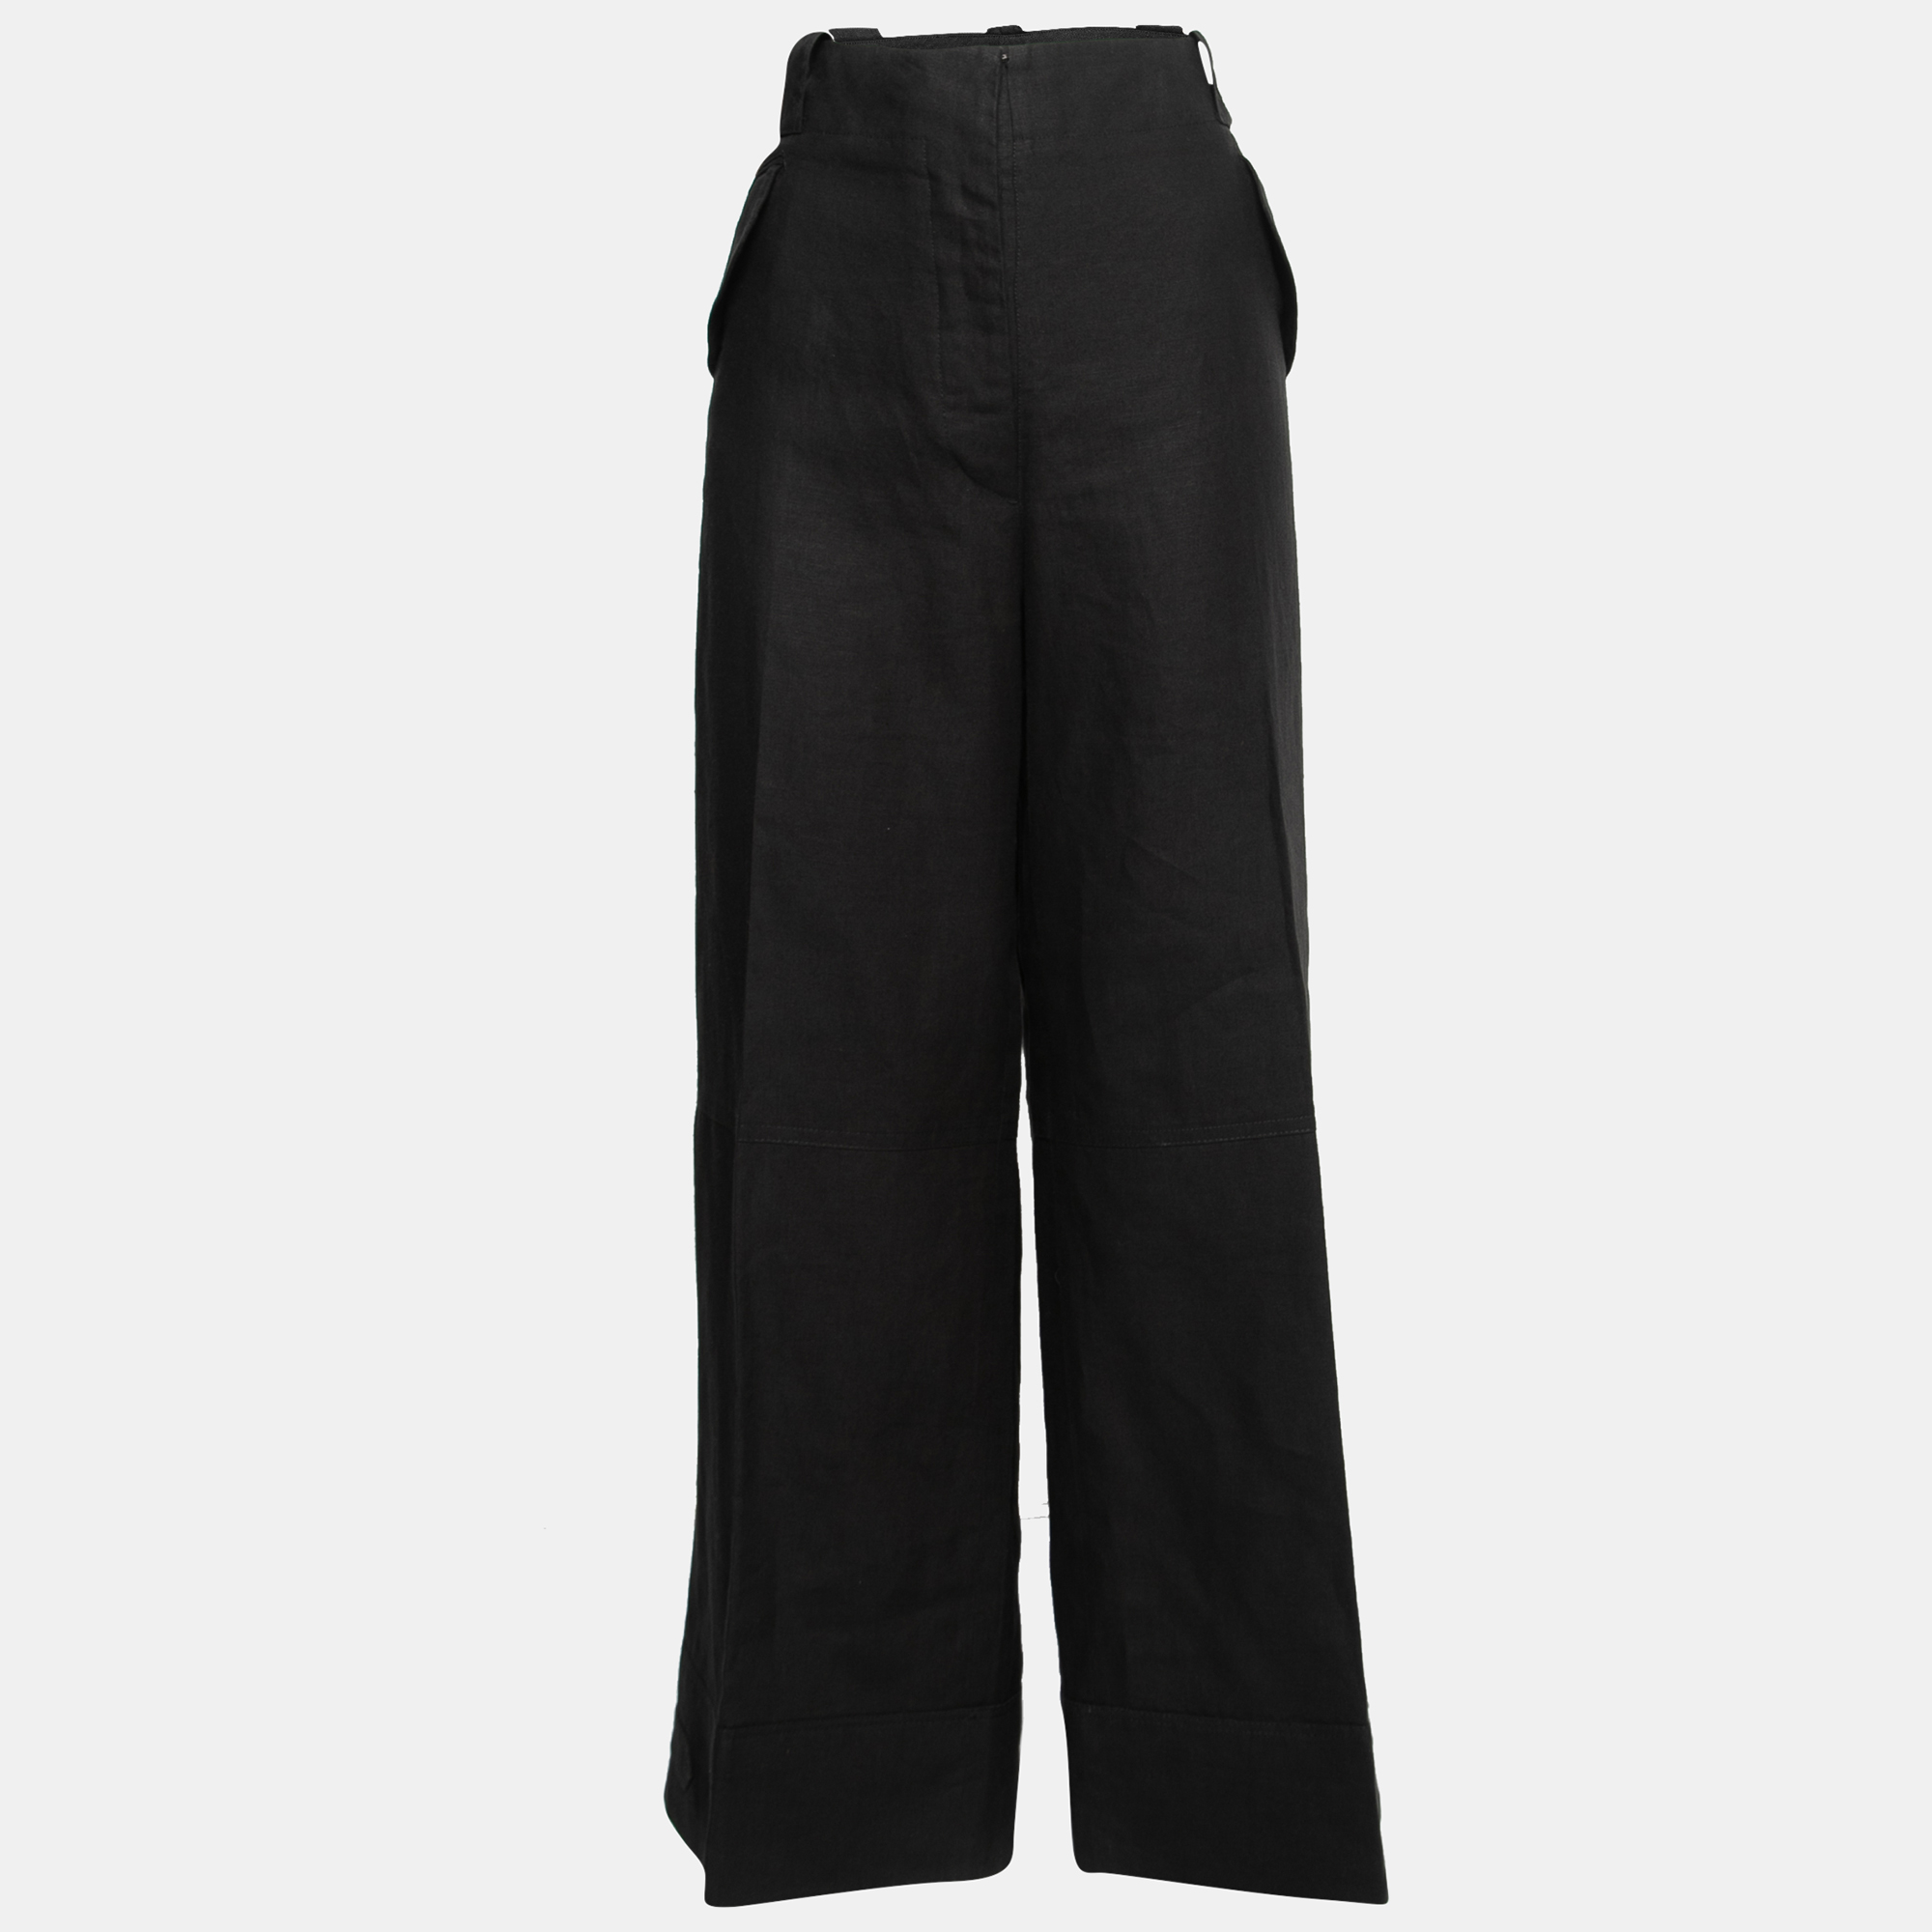 Gianfranco ferre vintage black linen wide leg trousers l